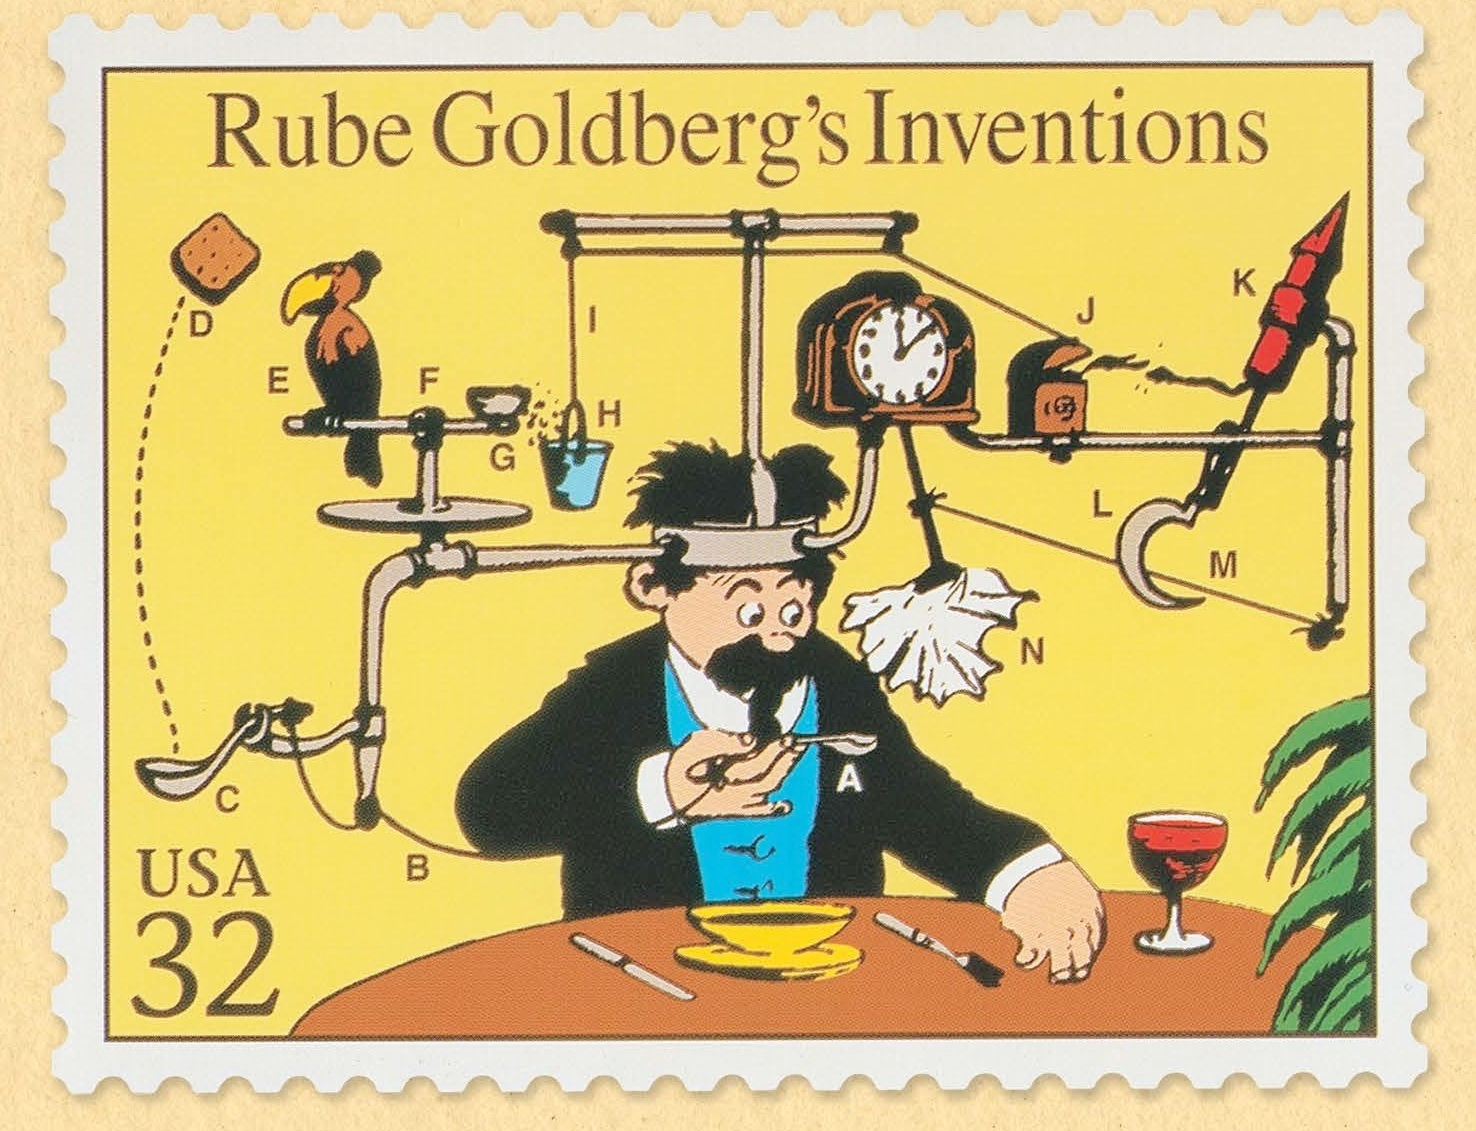 Defining Rube Goldberg